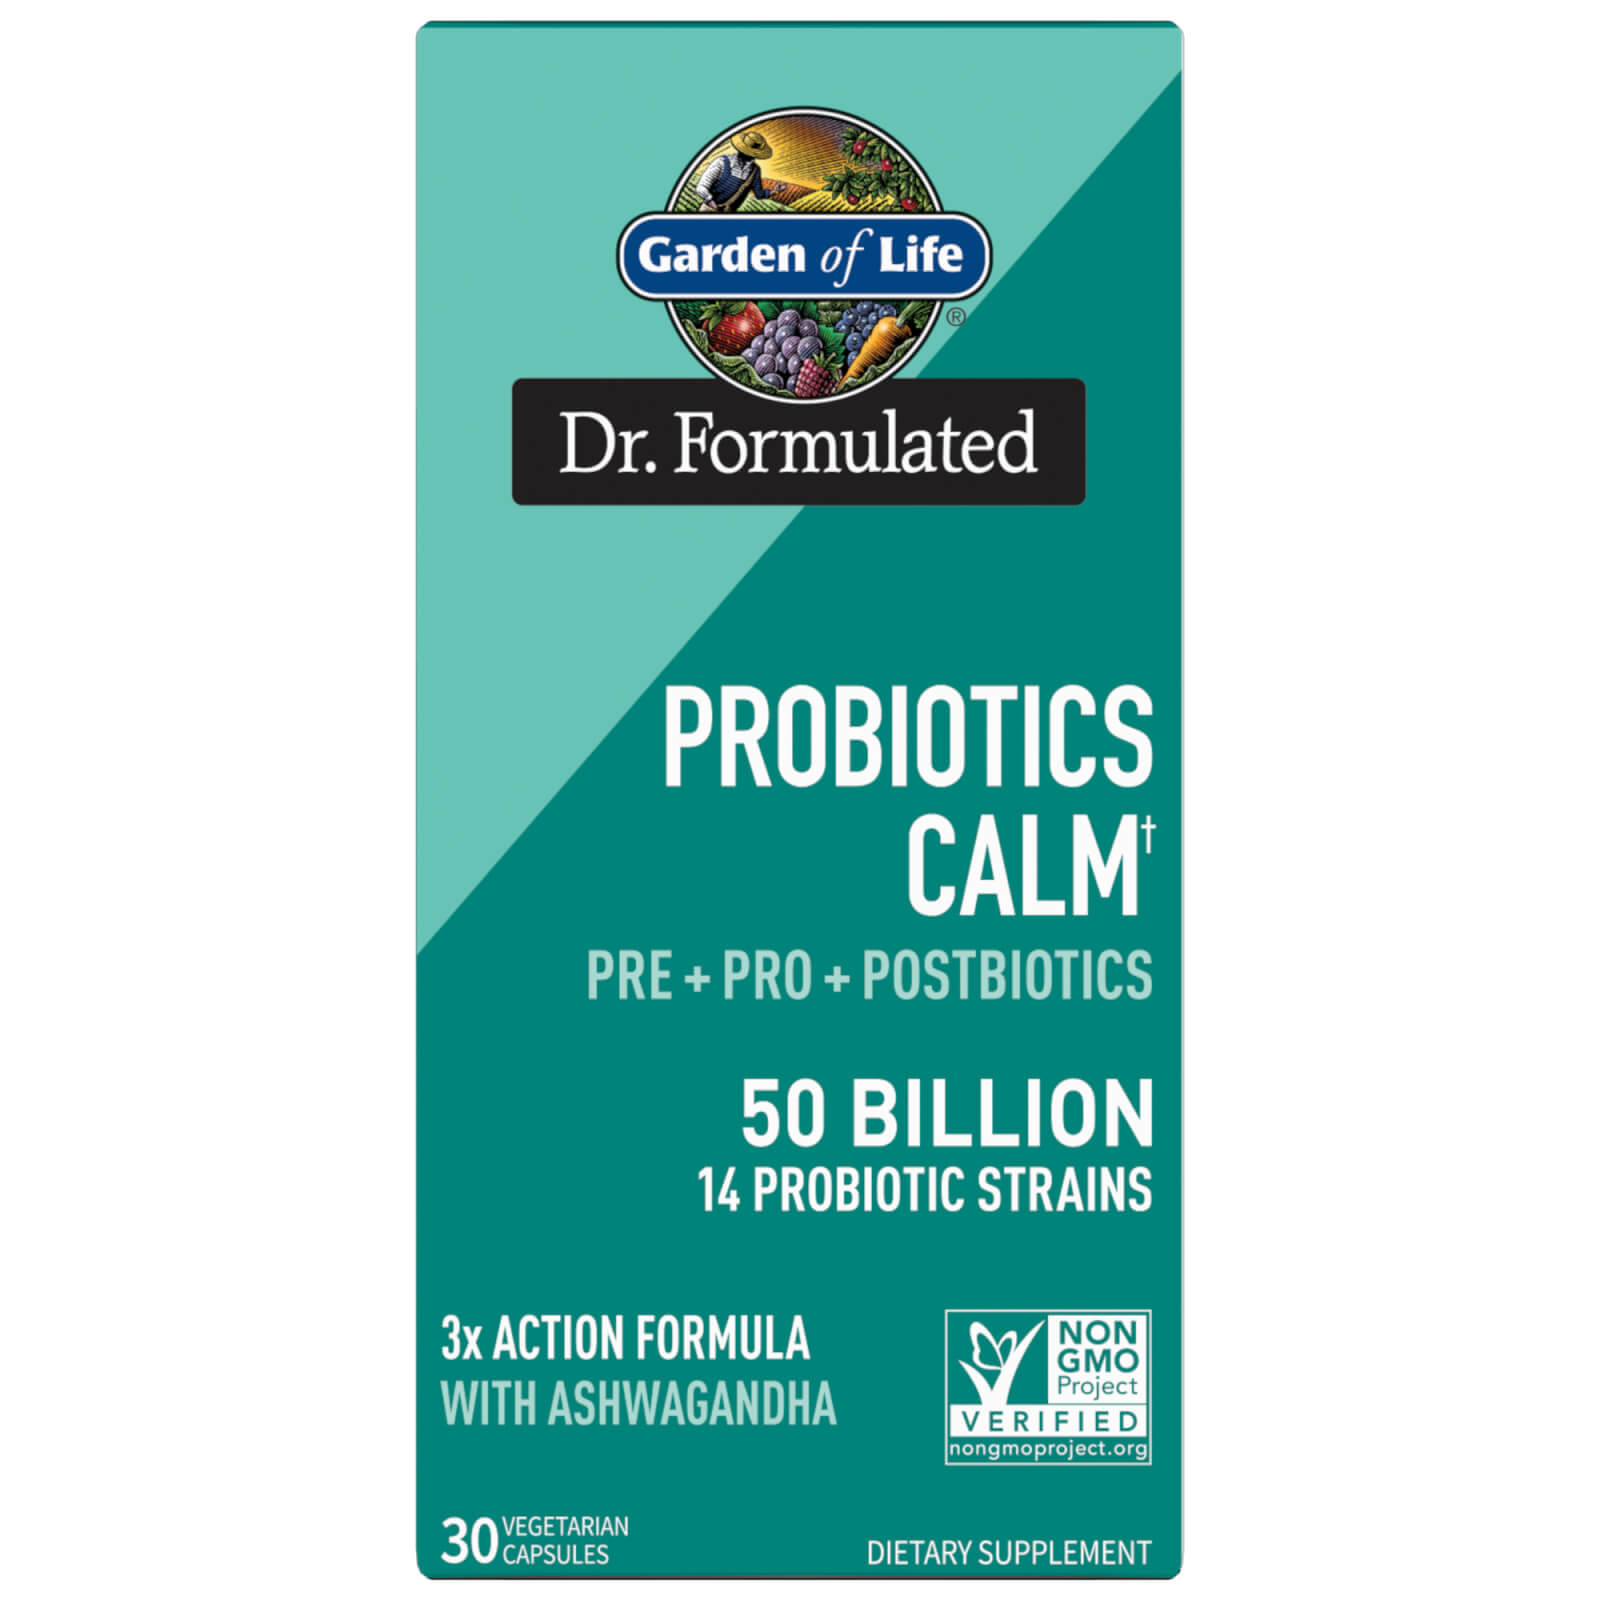 Dr. Formulated Probiotics Calm Pre+Pro+Postbiotics 50B